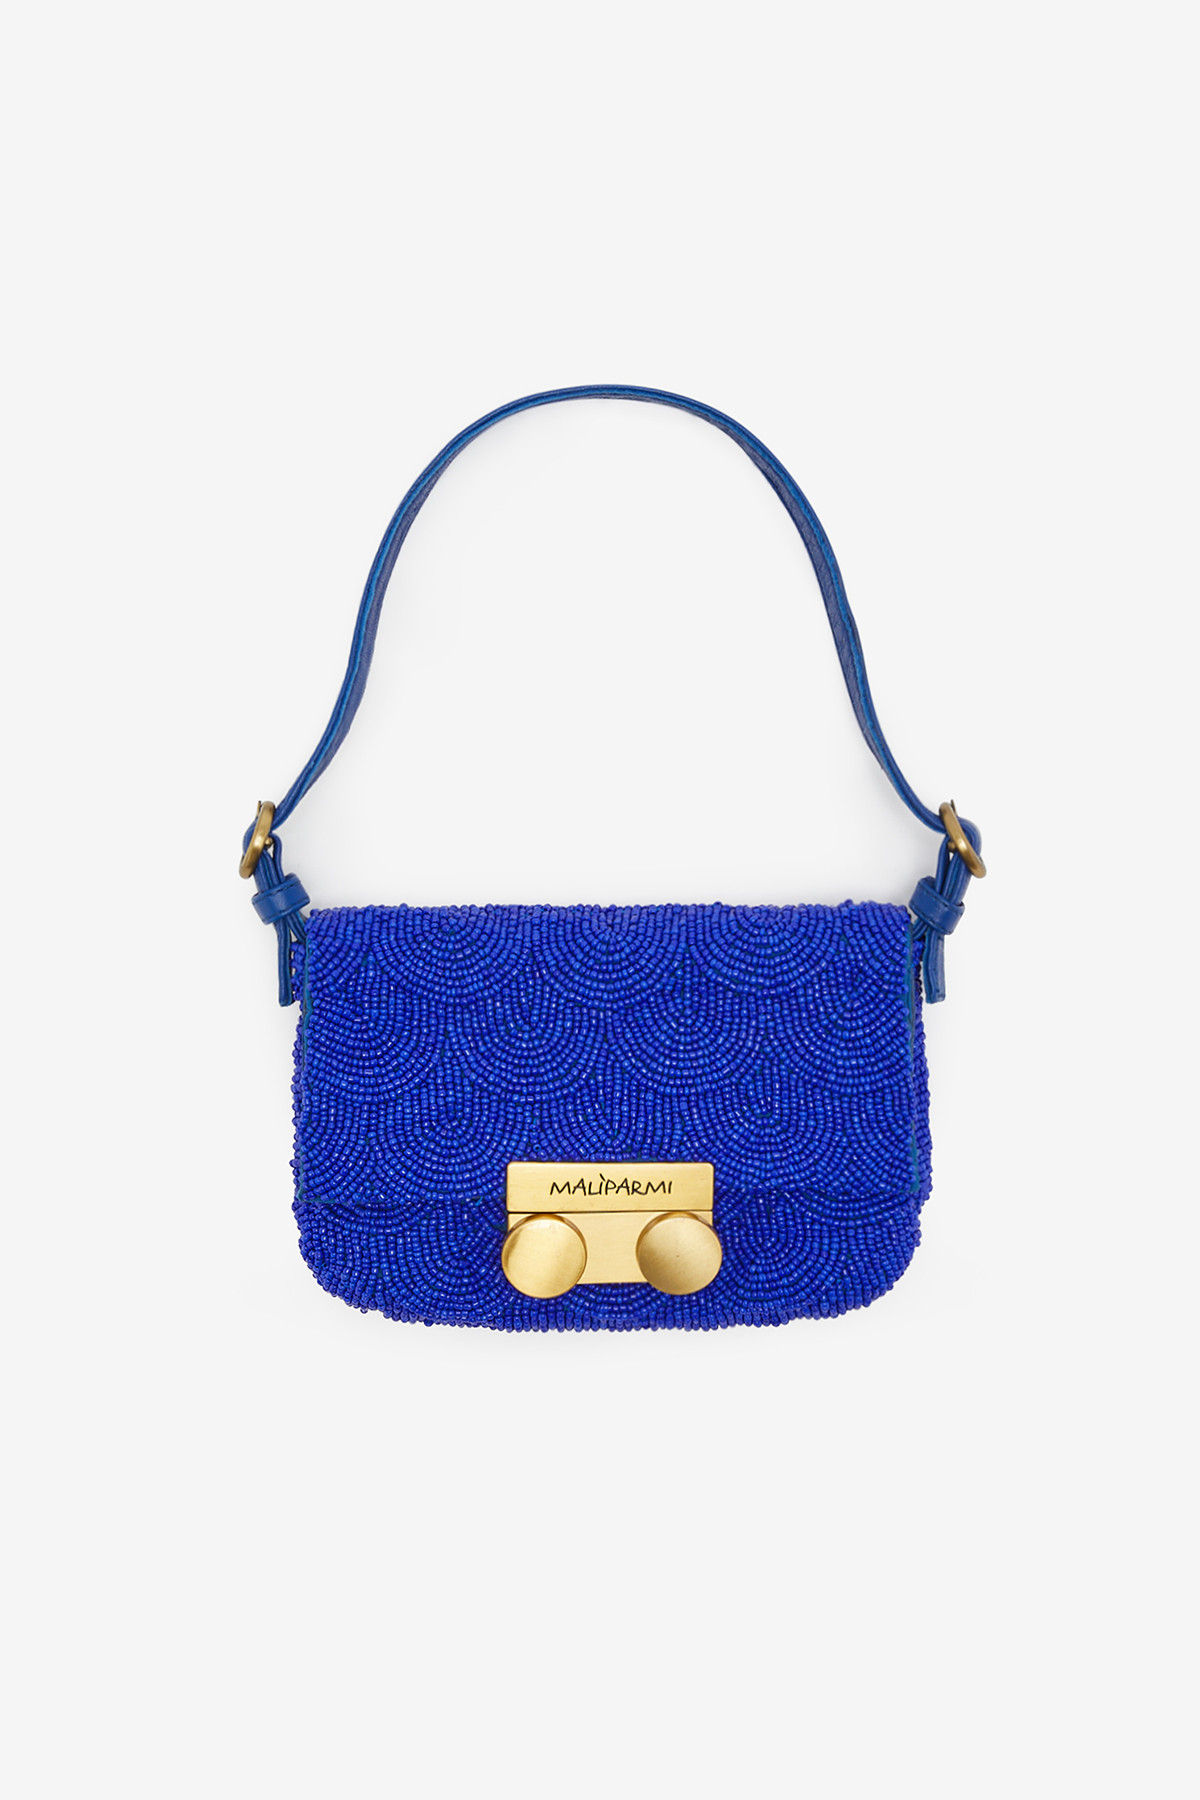 CIRCLES BEADS SMALL SHOULDER BAG Dark blue Malìparmi | Shop online